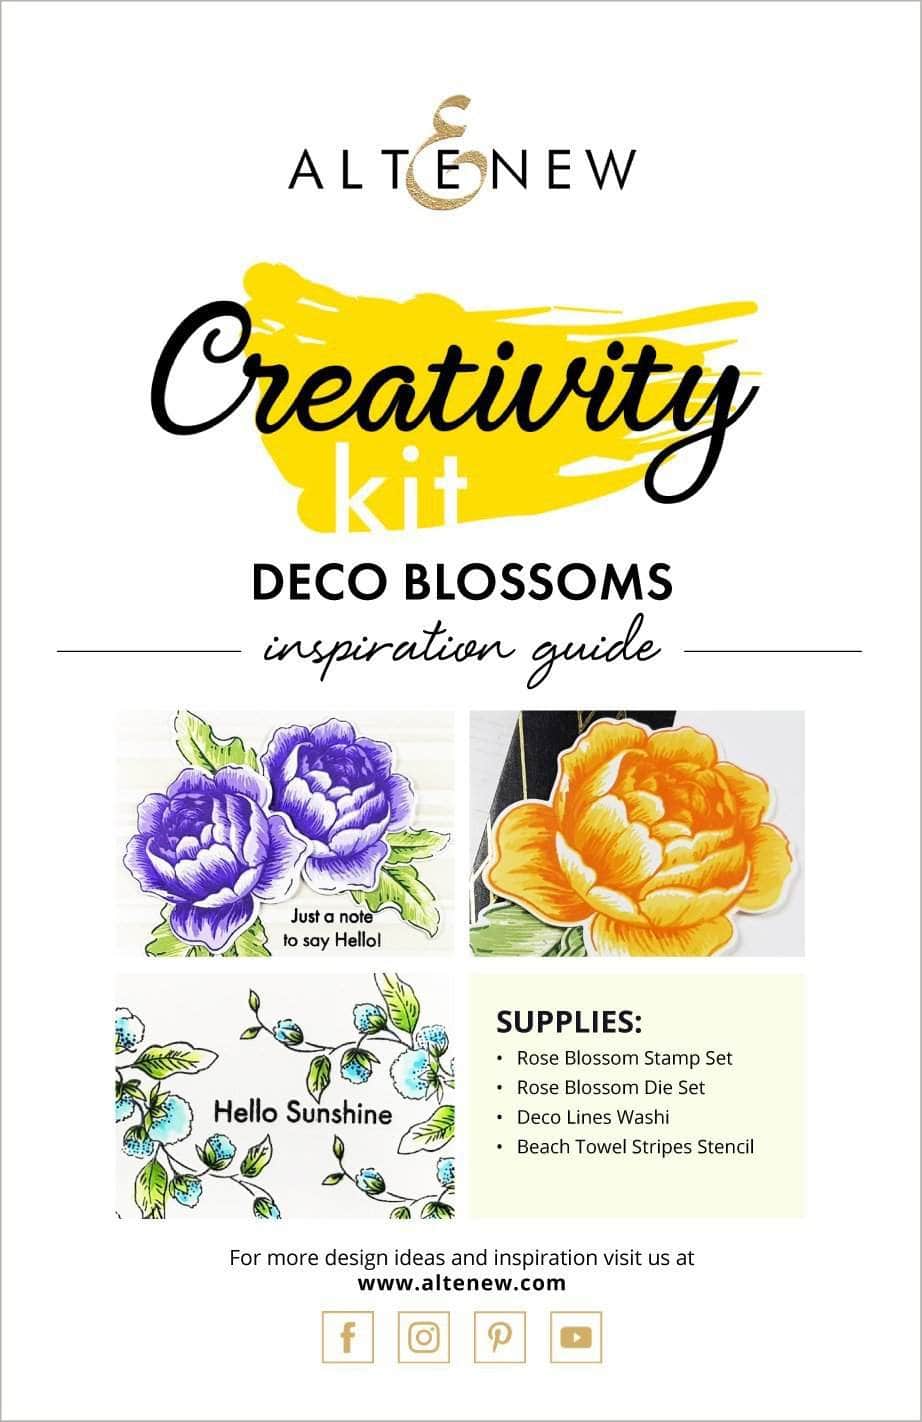 Printed Media Deco Blossoms Creativity Kit Inspiration Guide